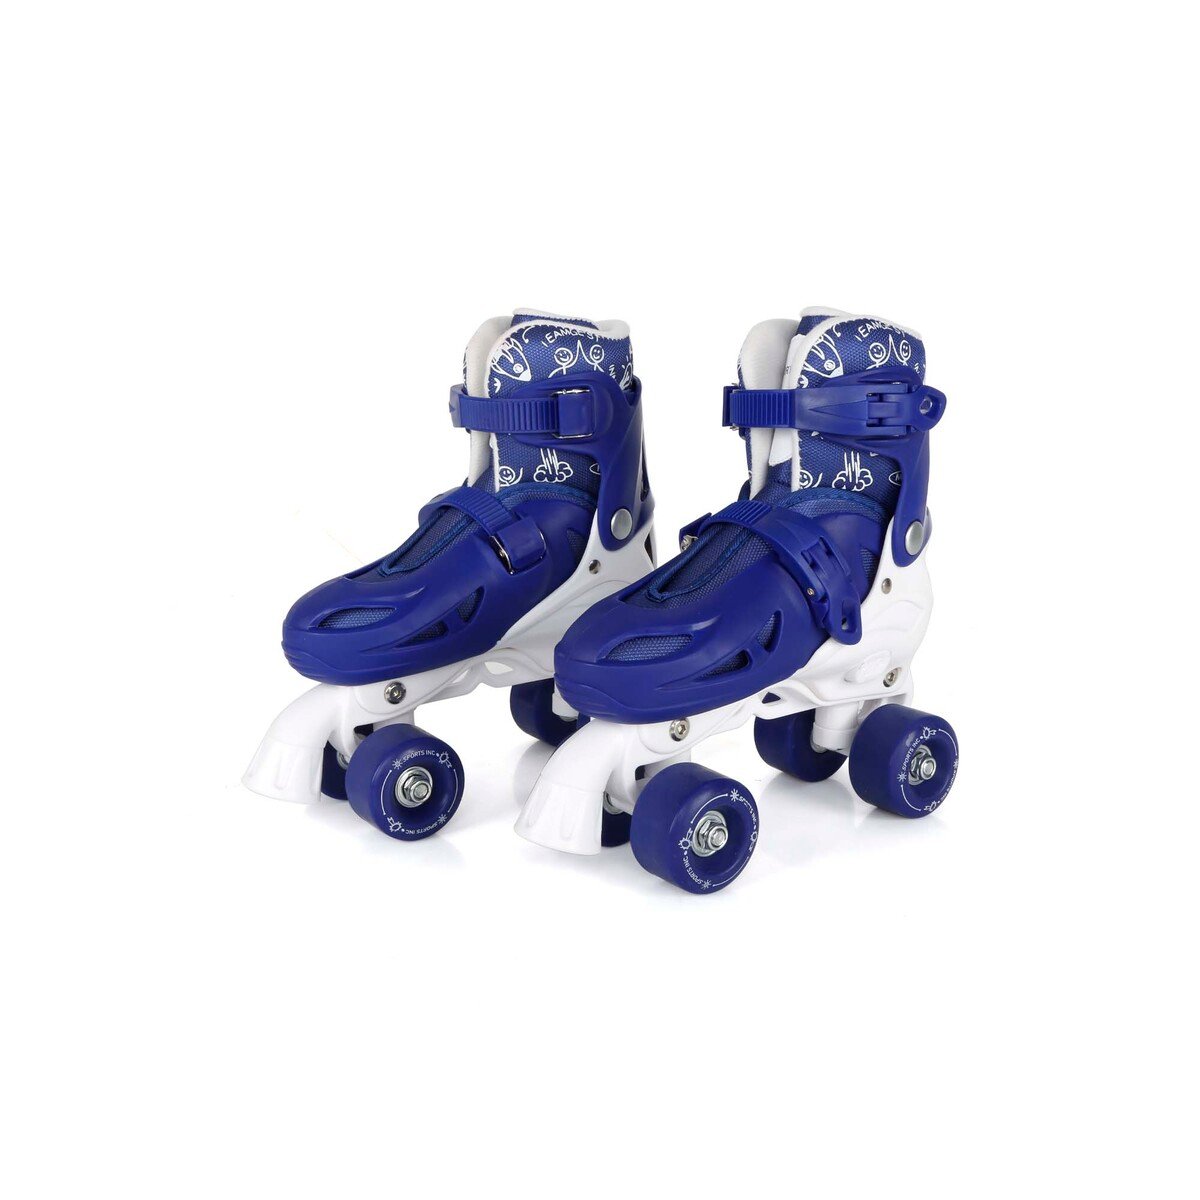 Sports Inc Skating Shoe, TE-725, Blue, Small